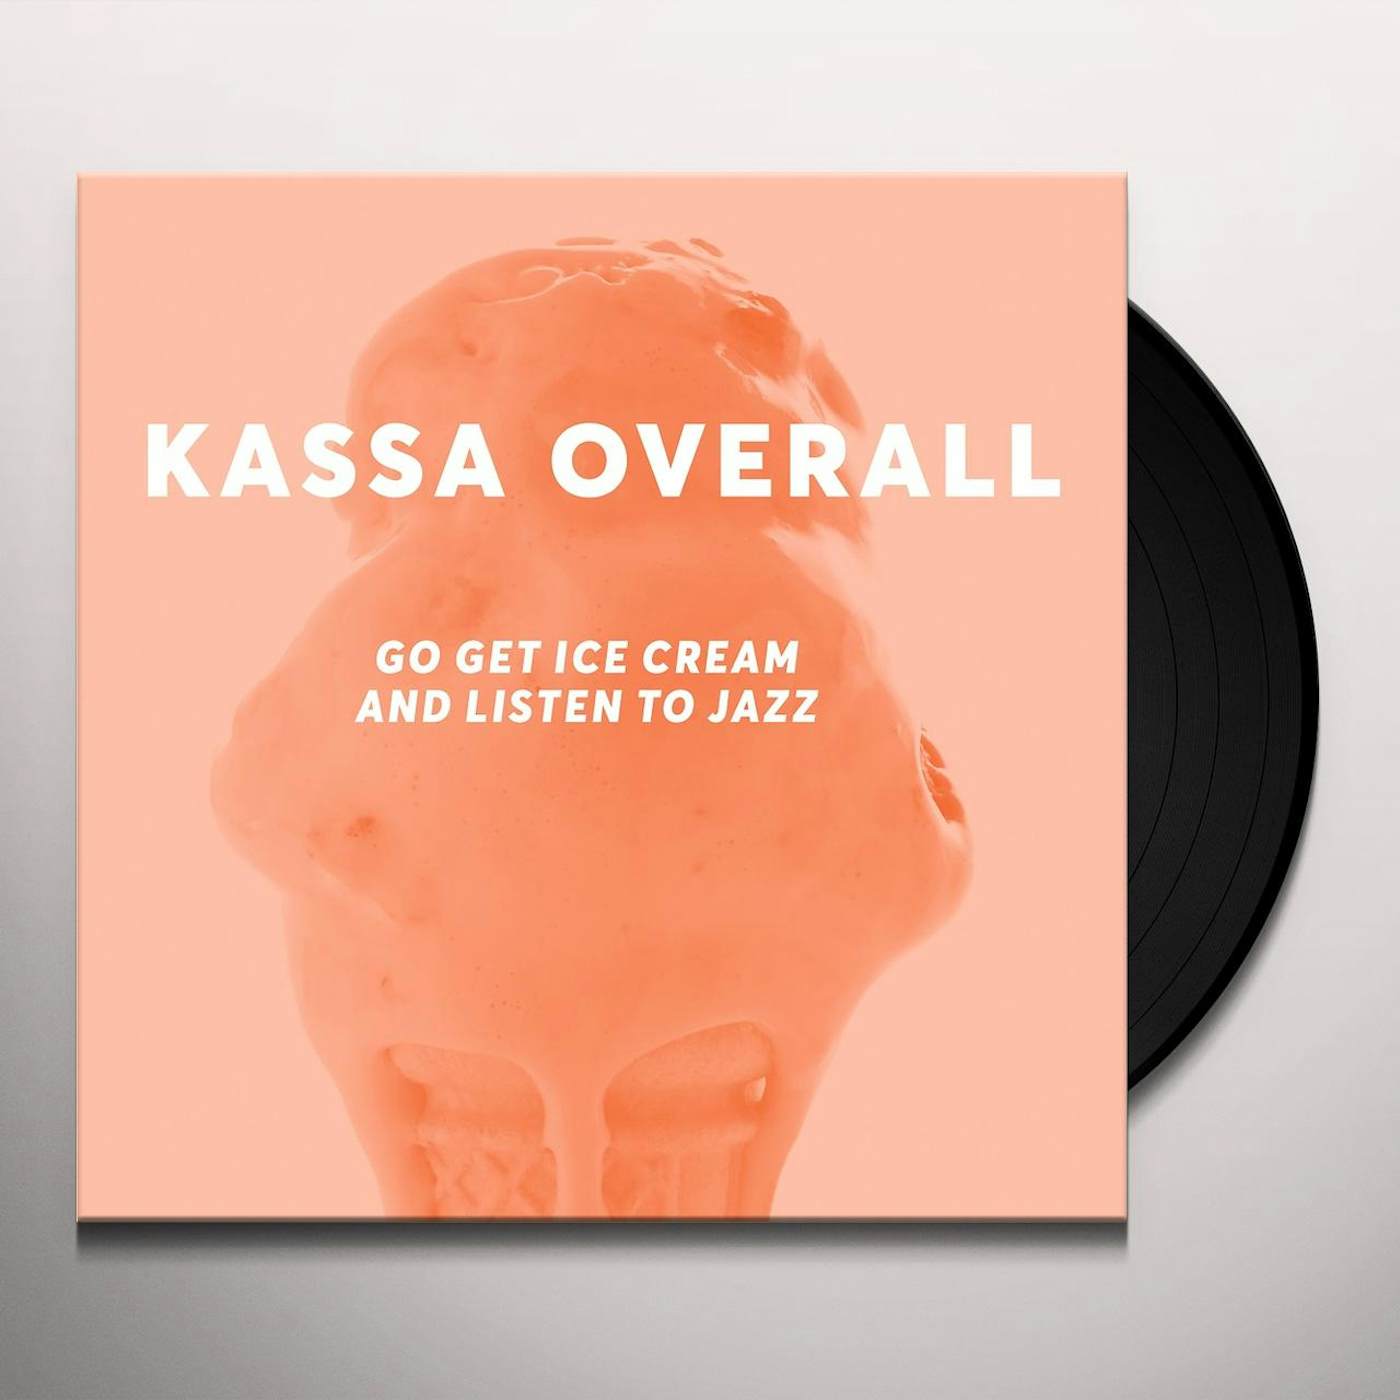 Kassa Overall Go Get Ice Cream and Listen to Jazz Vinyl Record